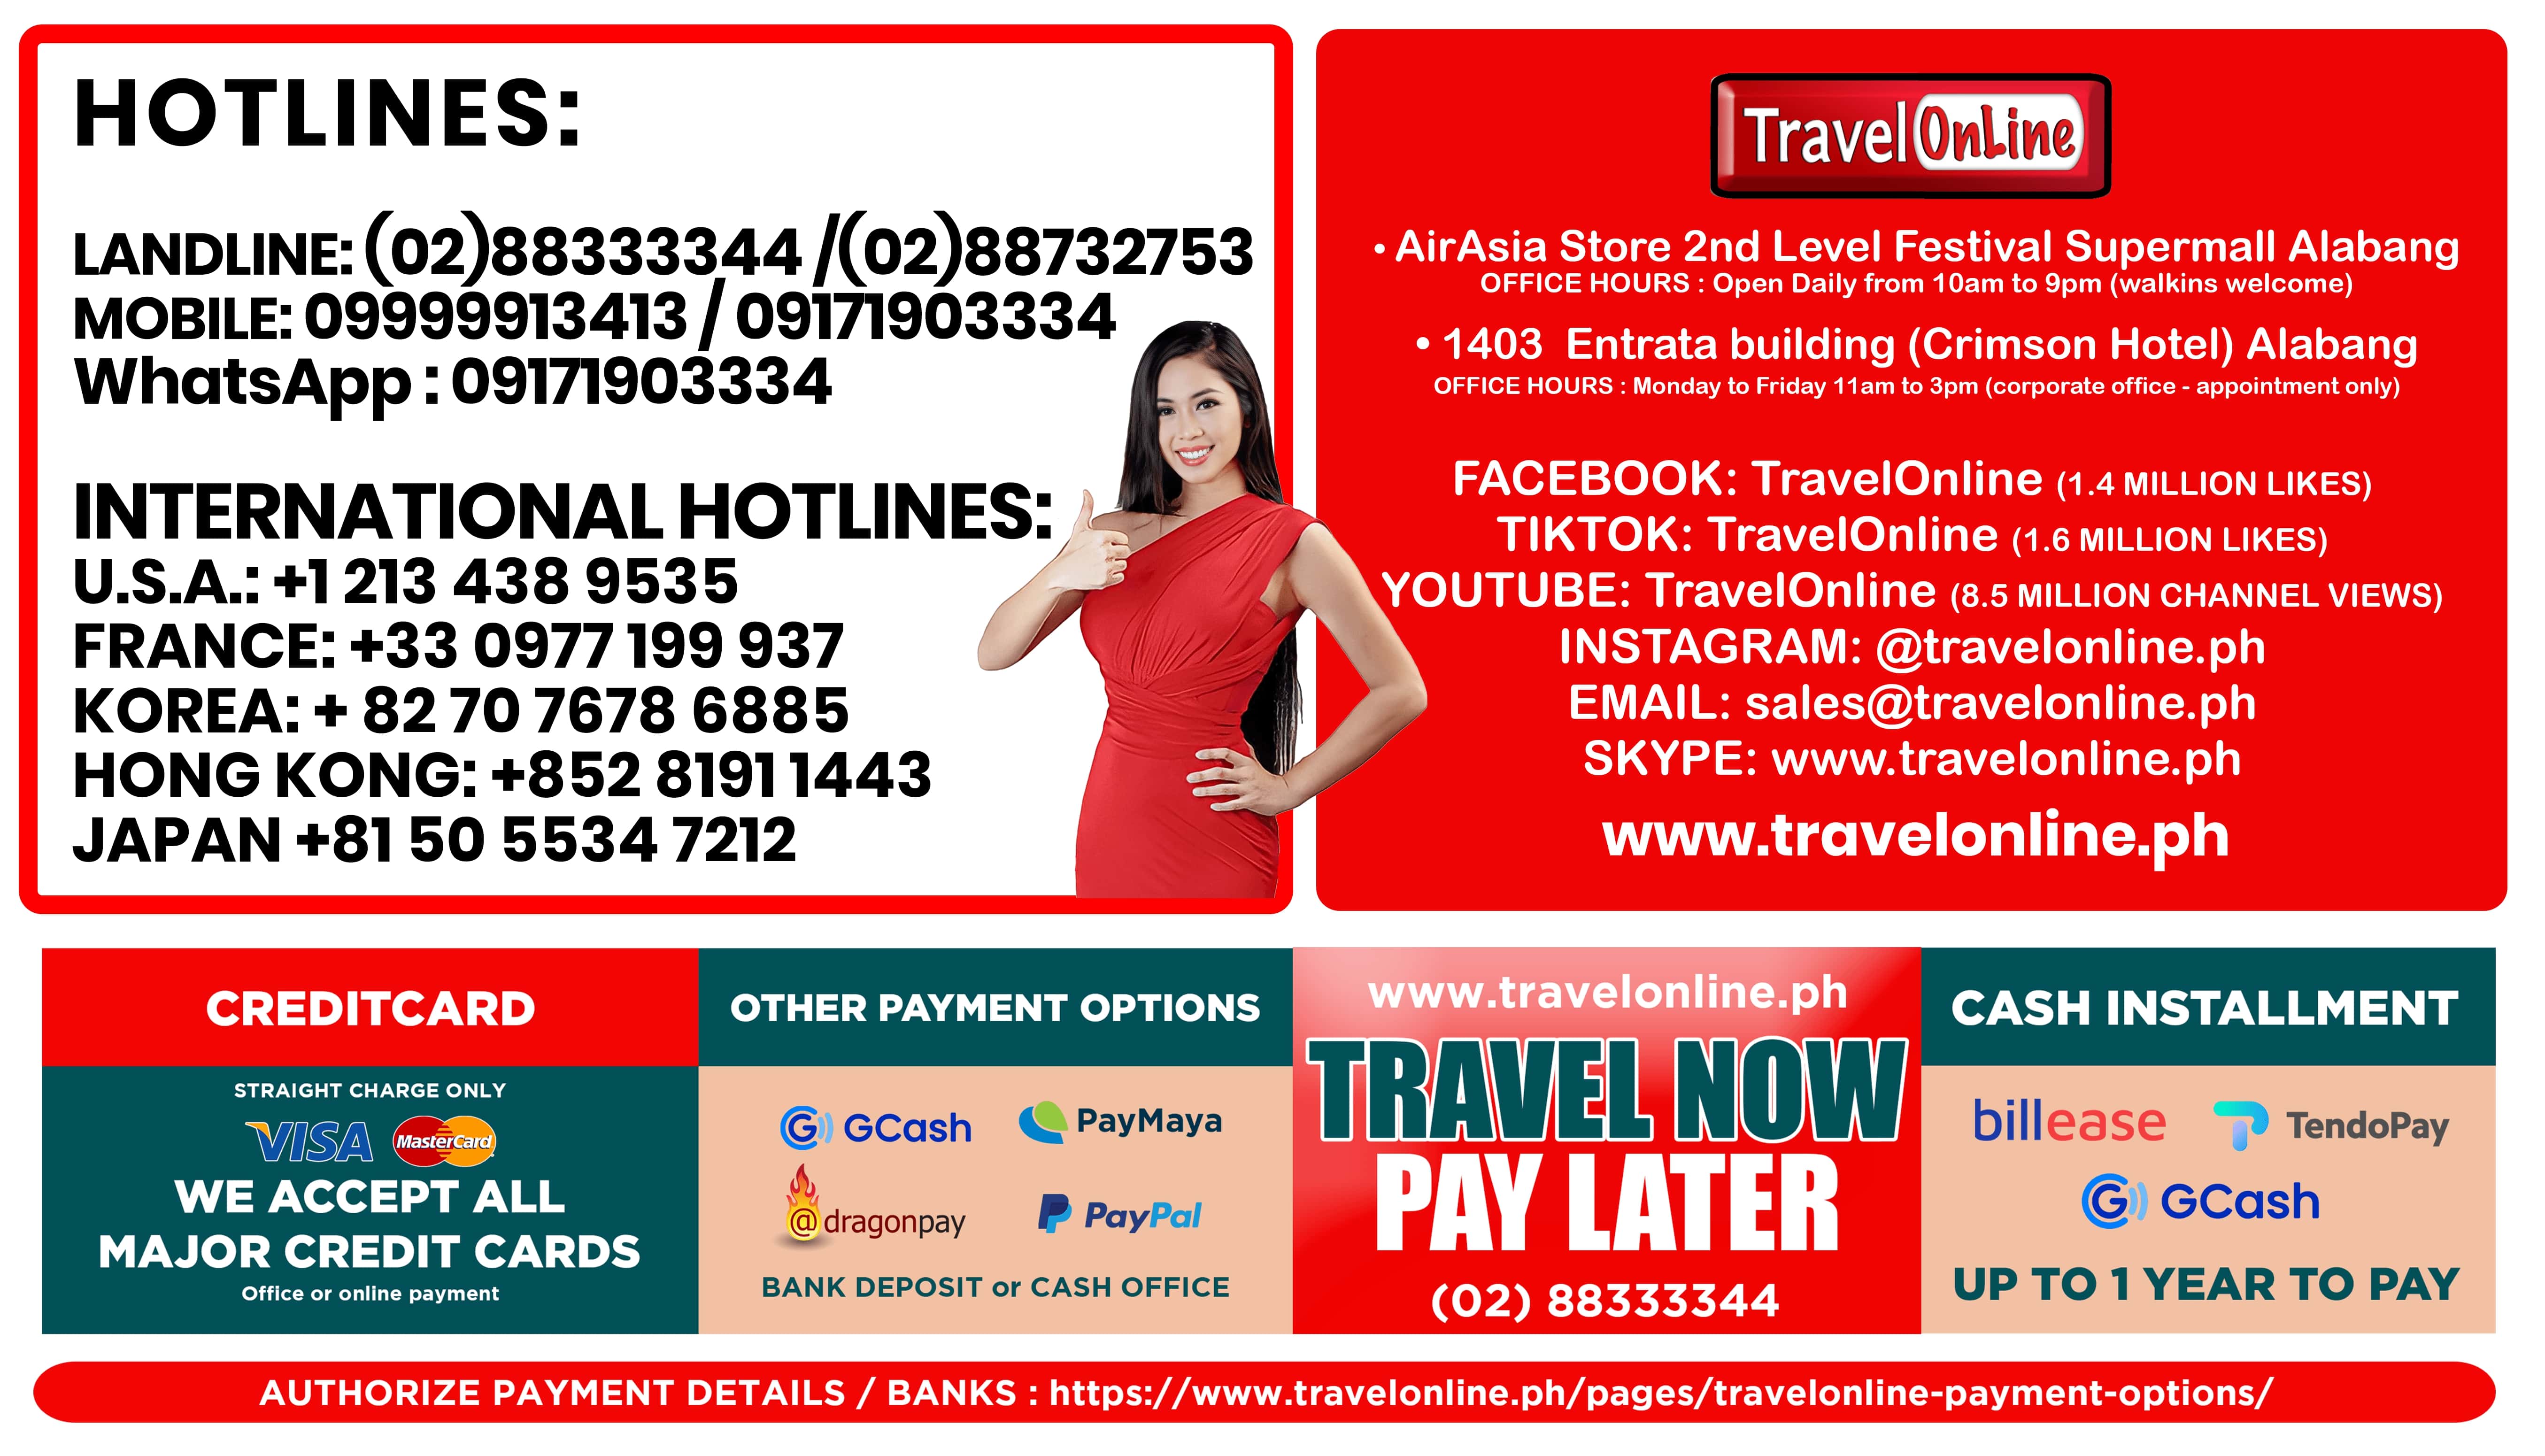 TravelOnline Philippines